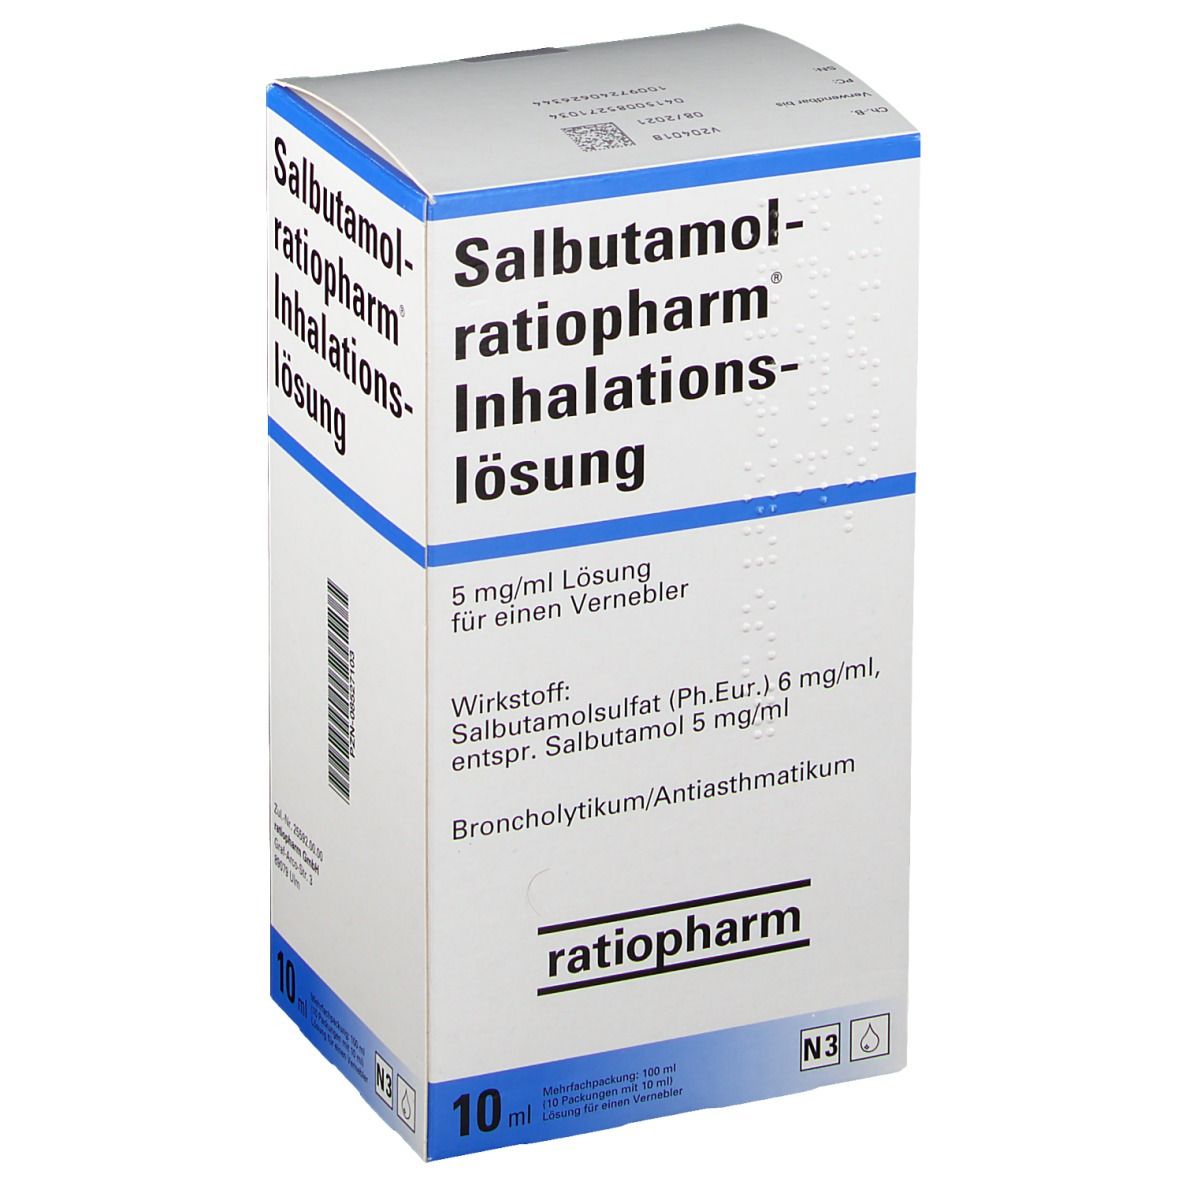 Salbutamol-ratiopharm® Inhalations